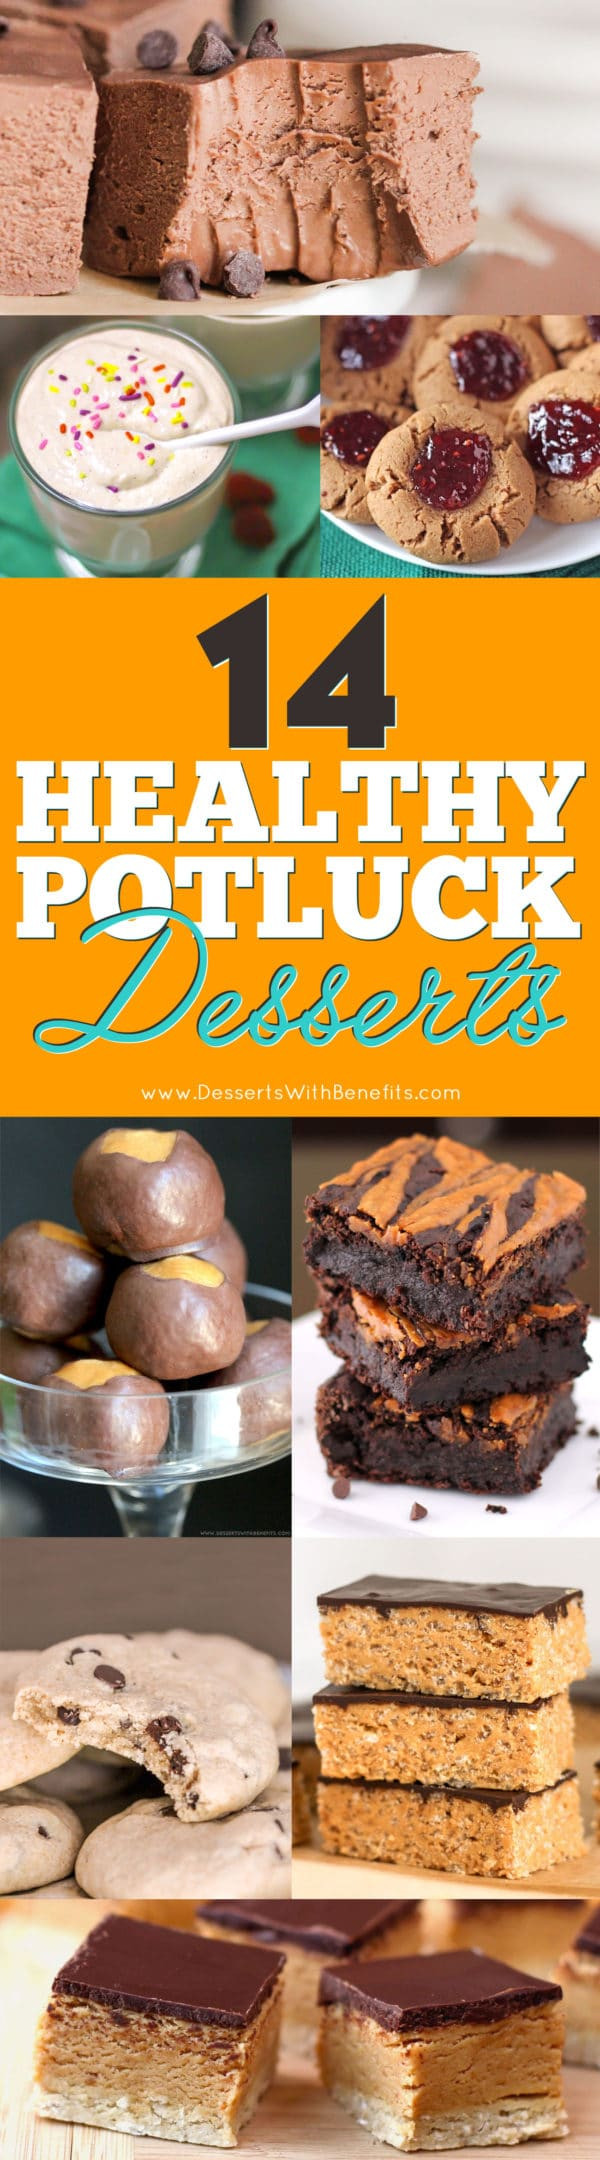 Potluck Dessert Recipes
 Top 14 Healthy Potluck Dessert Recipes with Gluten Free